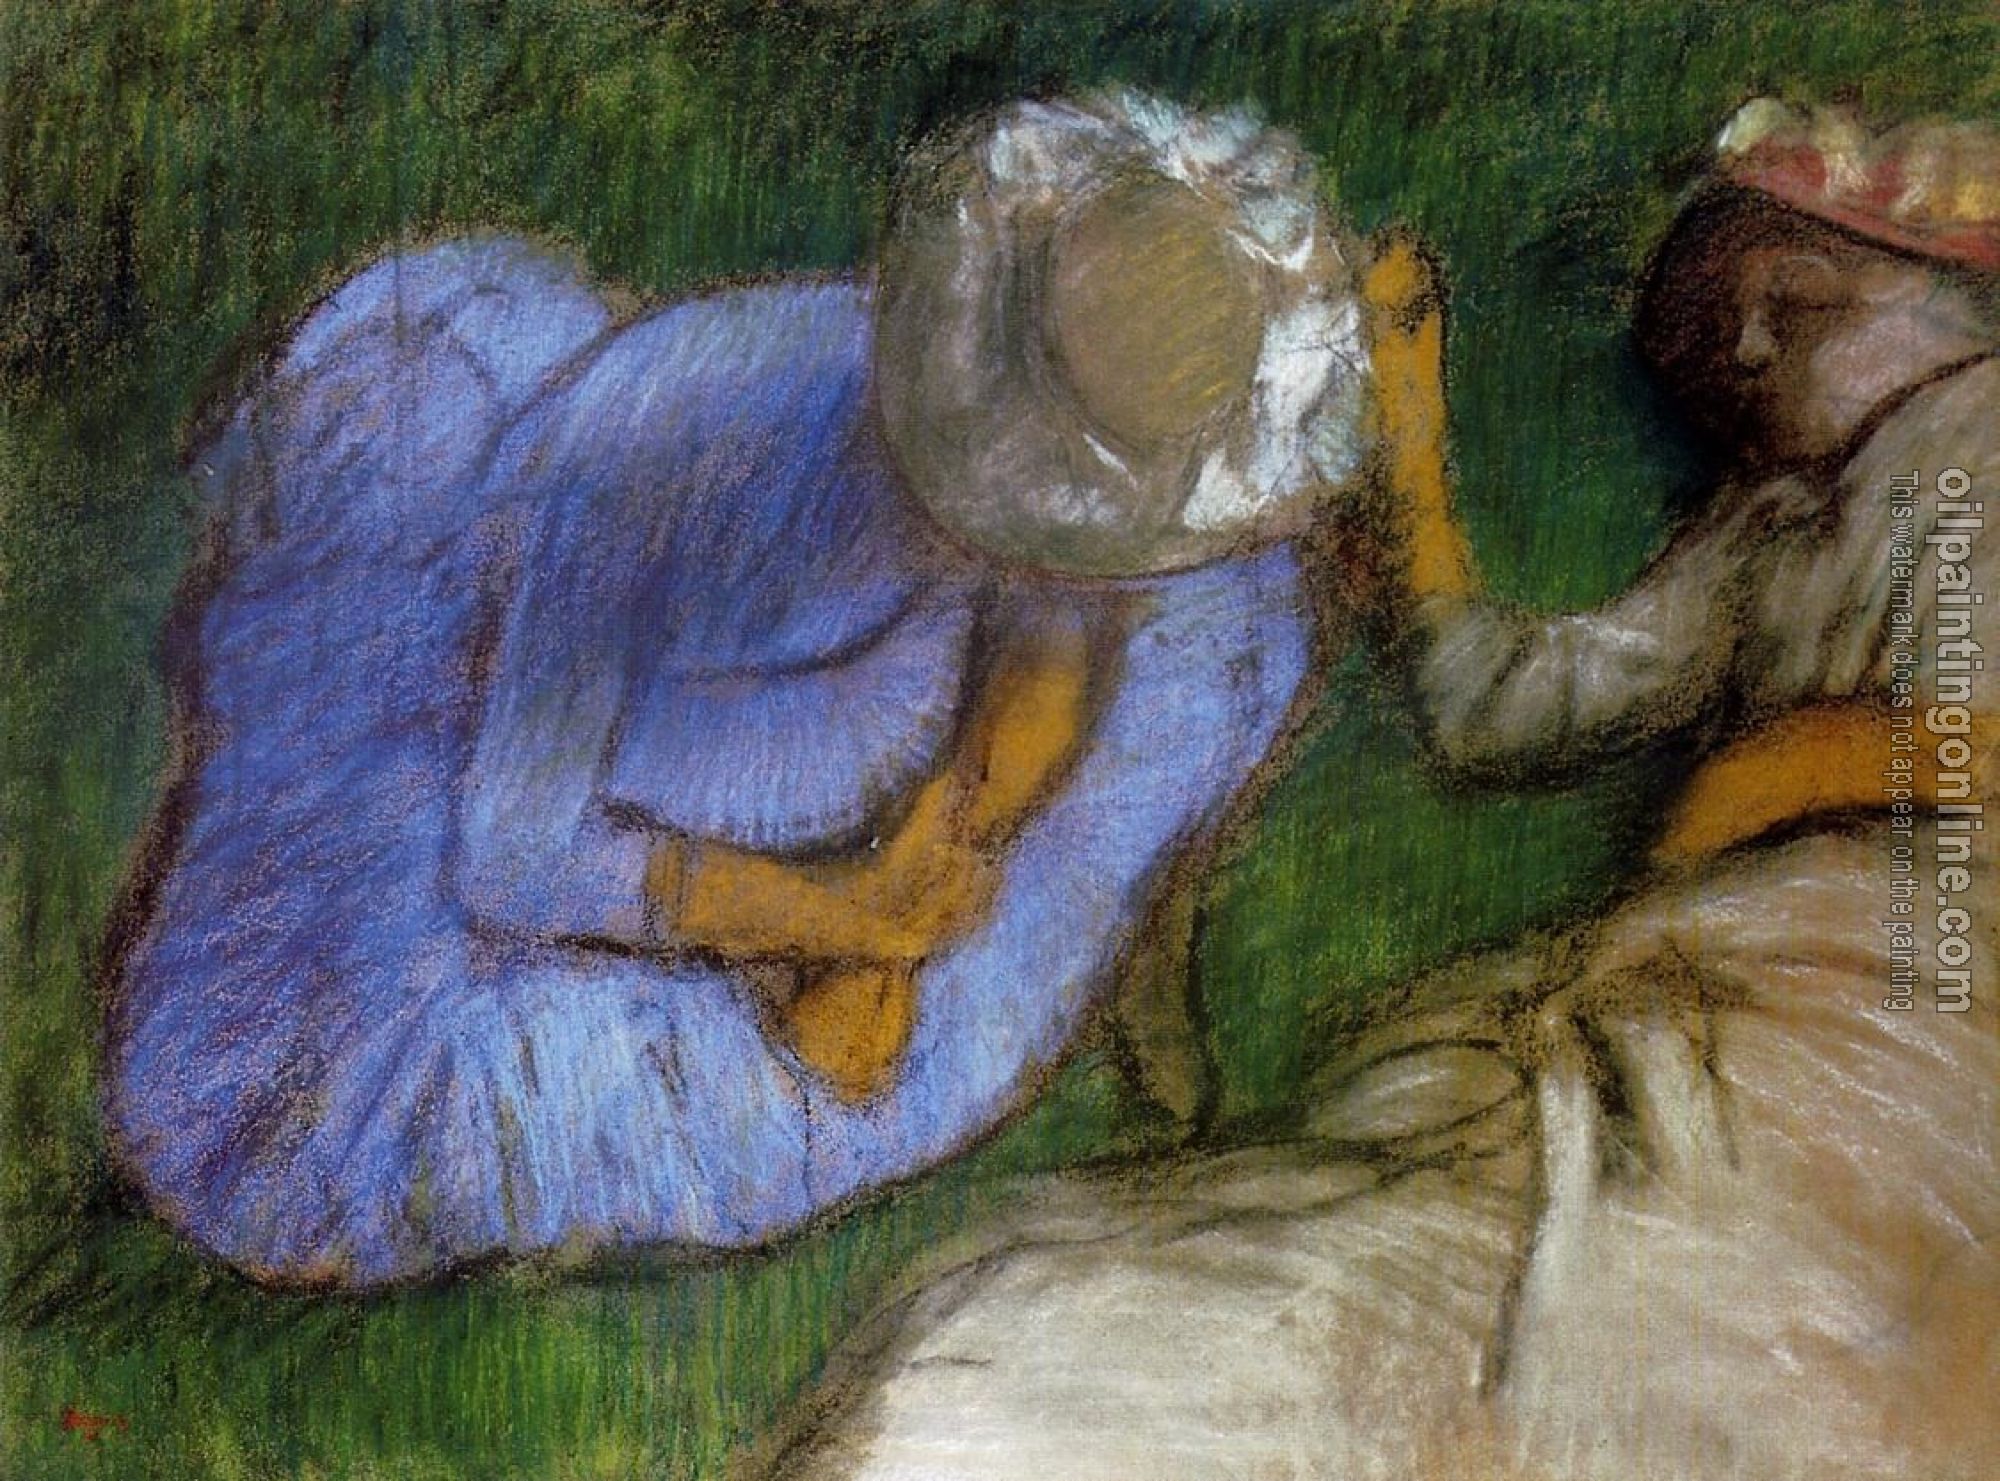 Degas, Edgar - Young Women Resting in a Field